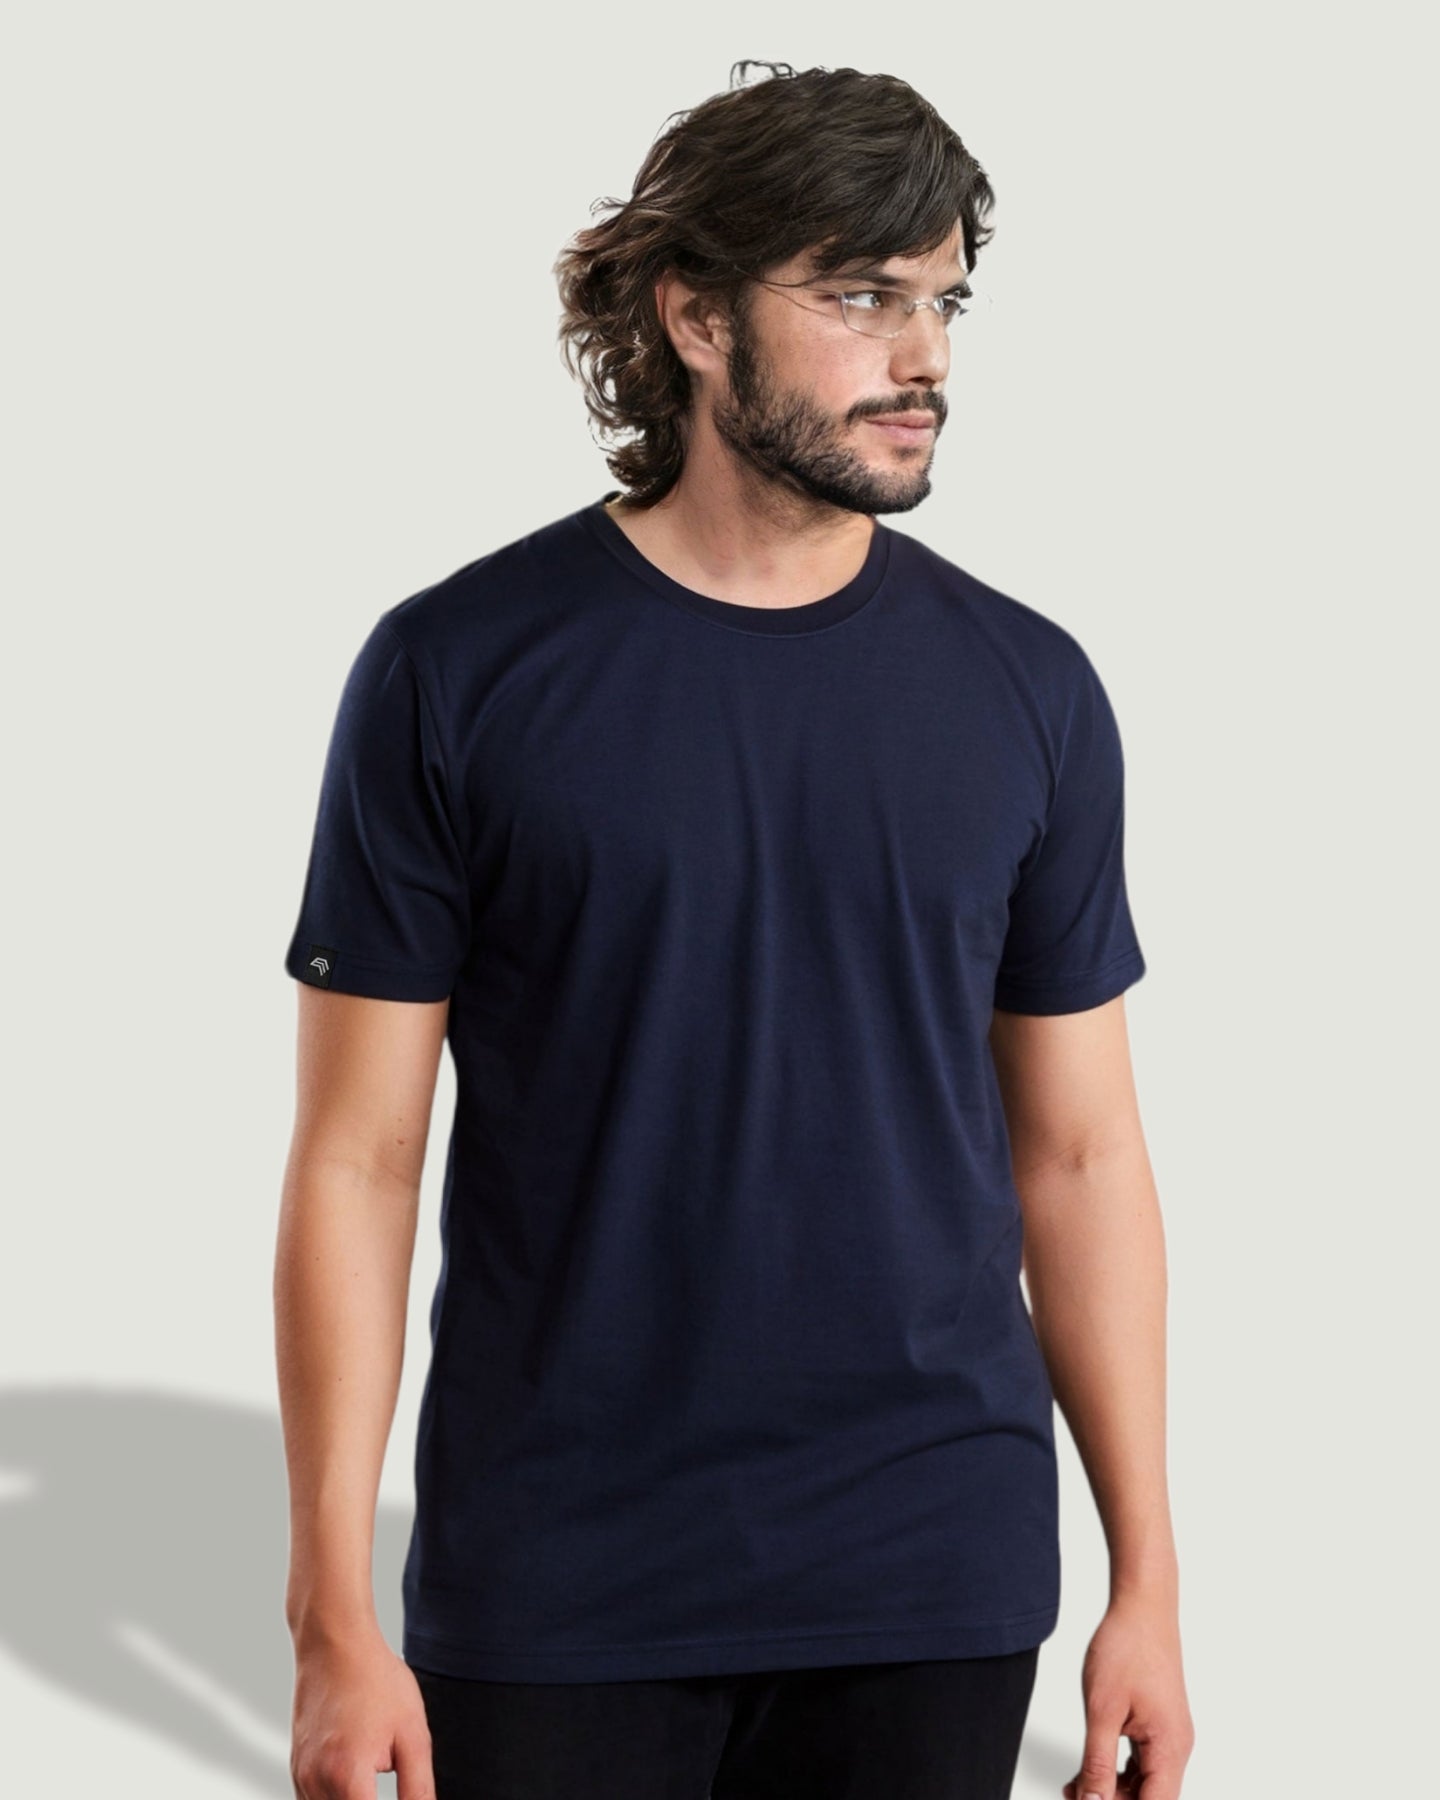 RMH 0101 ― Herren Luxury Bio-Baumwolle T-Shirt - Royal Blau